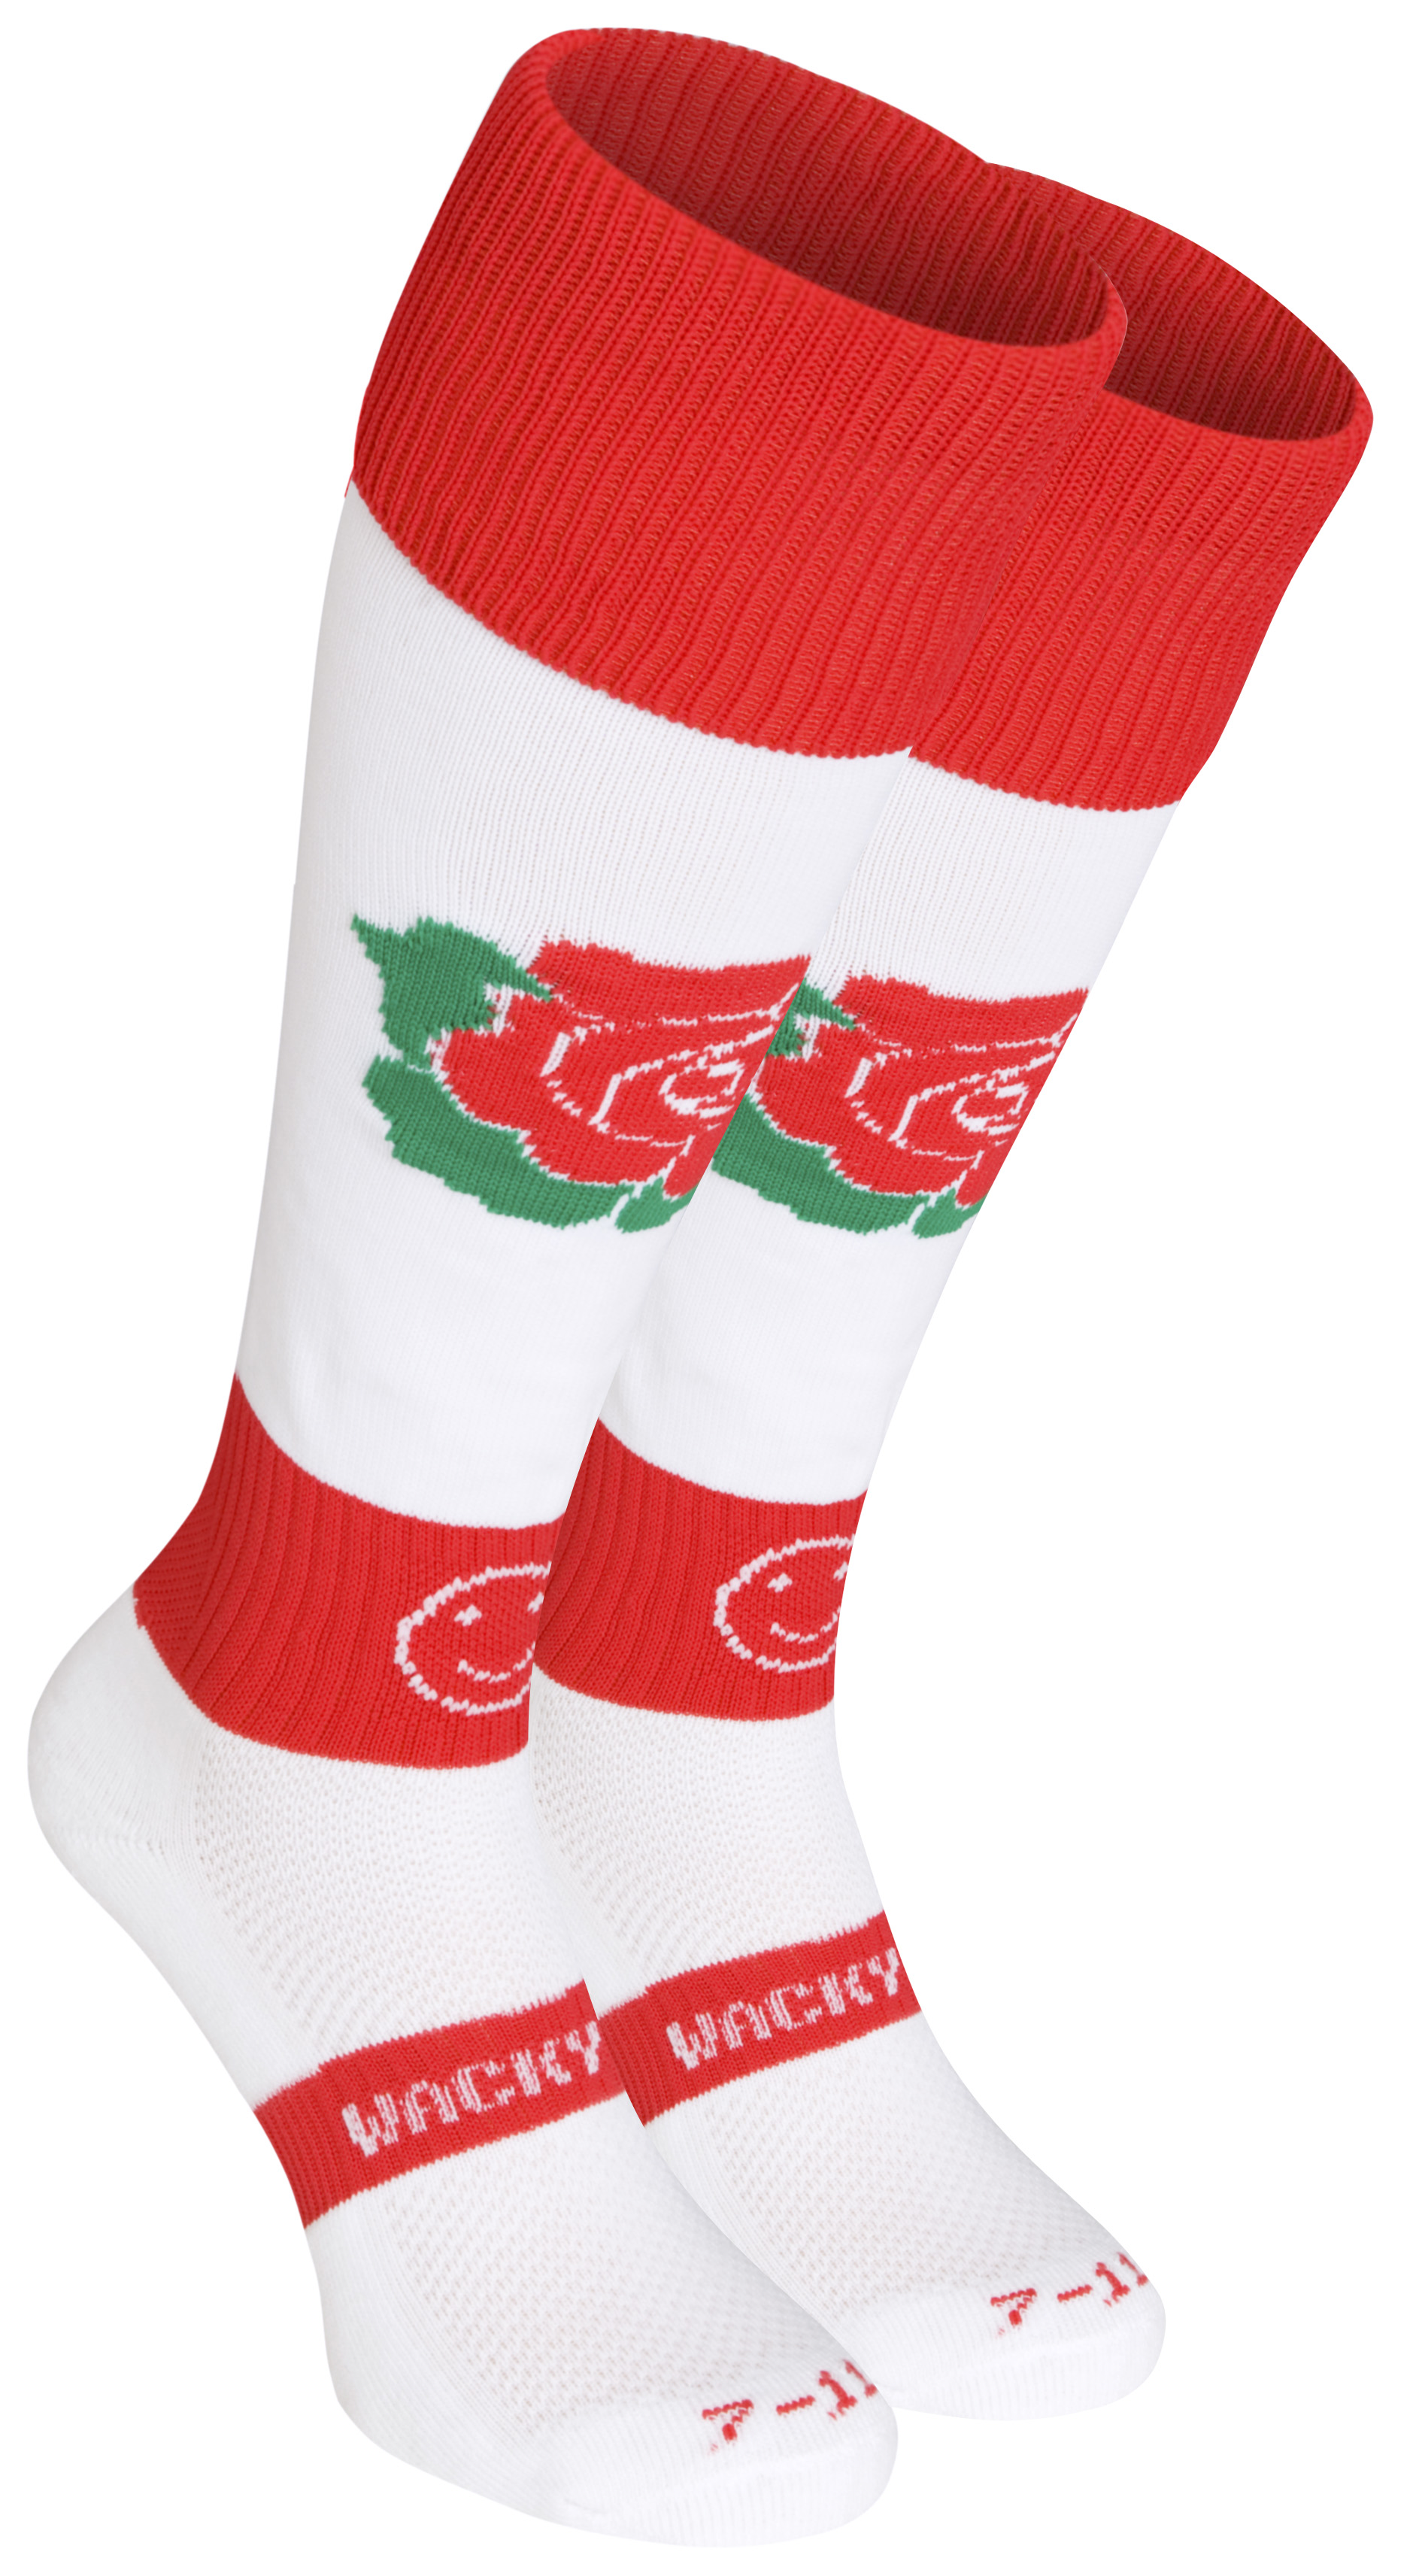 Wacky Sox England Socks - White/Red - Size 12-14